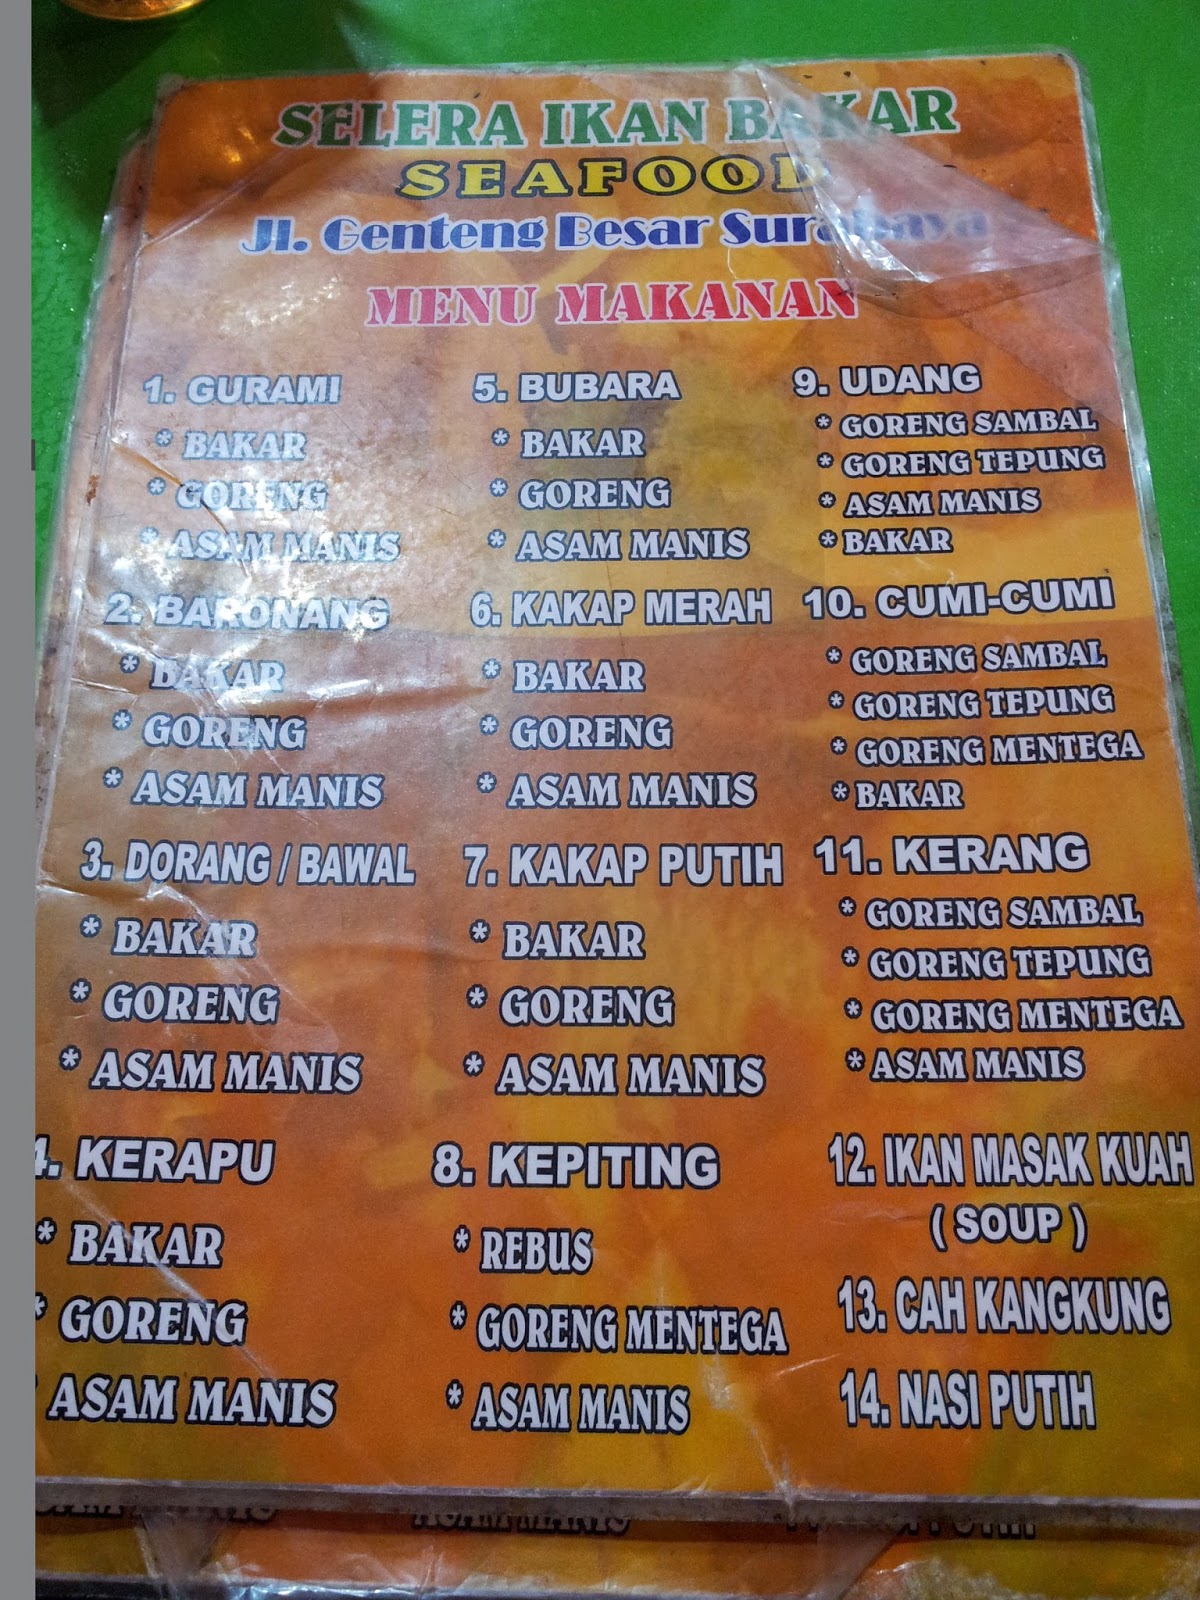 Surabaya Food Stalls & Restaurant: Selera Ikan Bakar Seafood Genteng Besar